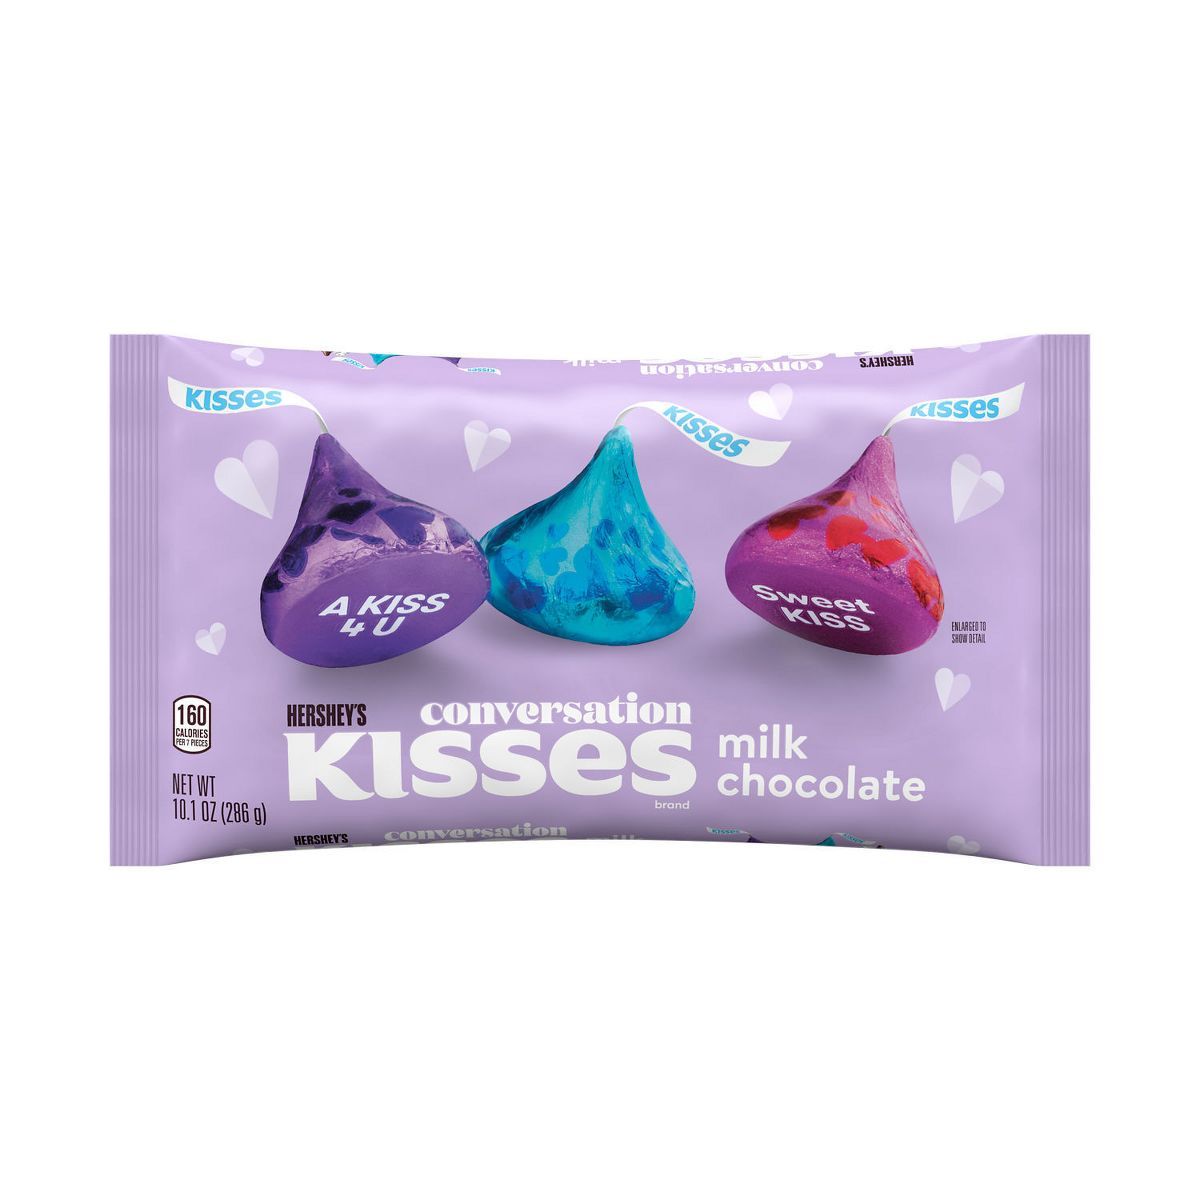 Hershey's Valentine's Day Milk Chocolate Conversation Kisses Candy Bag  - 10.1oz | Target